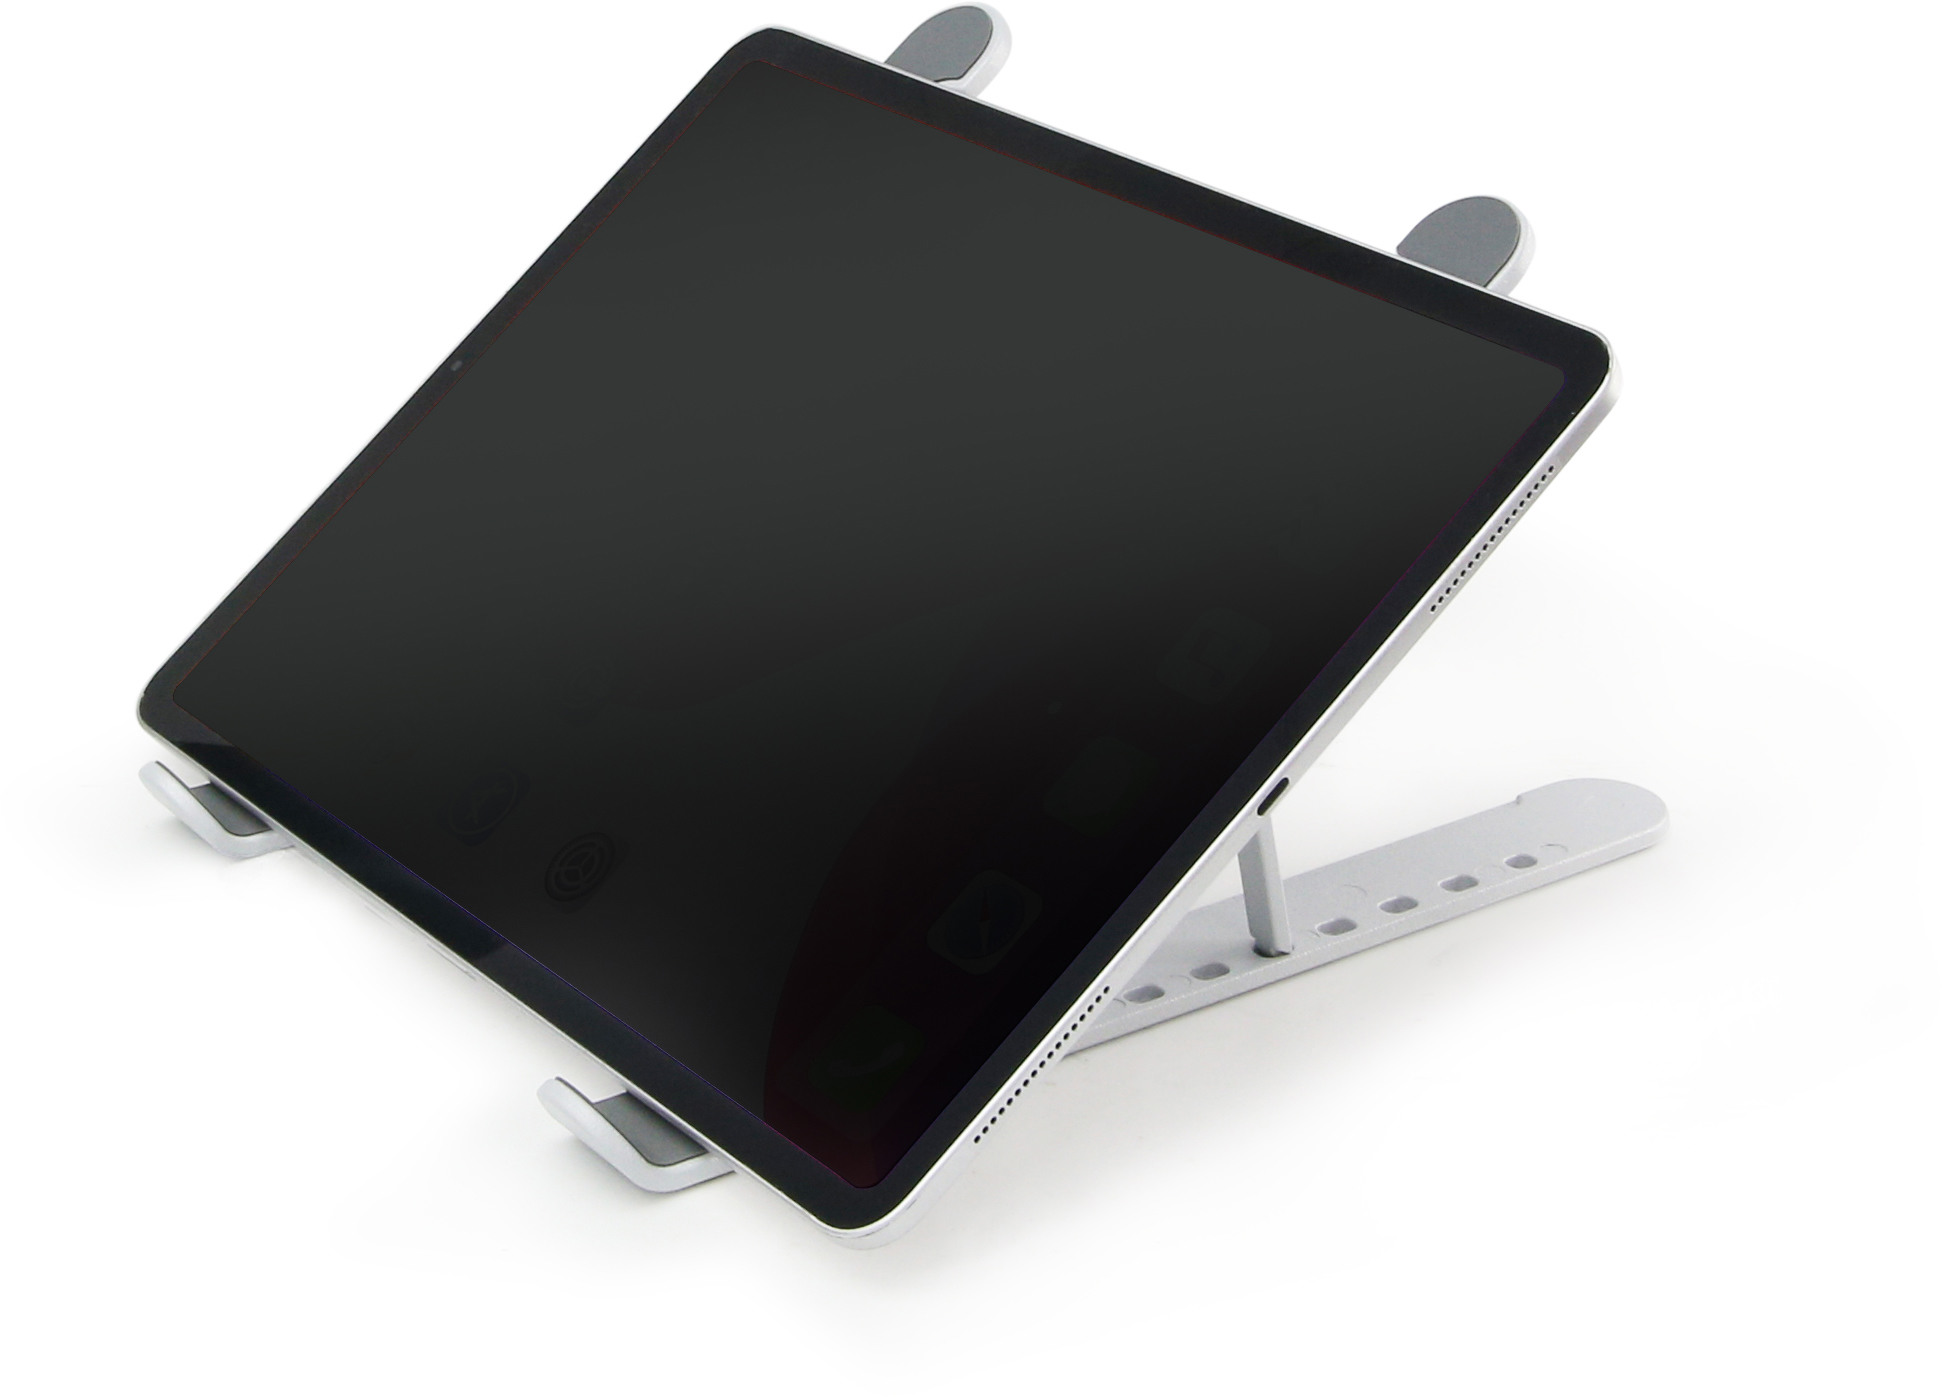 DICOTA Portable Laptop/Tablet Stand D31889 grey